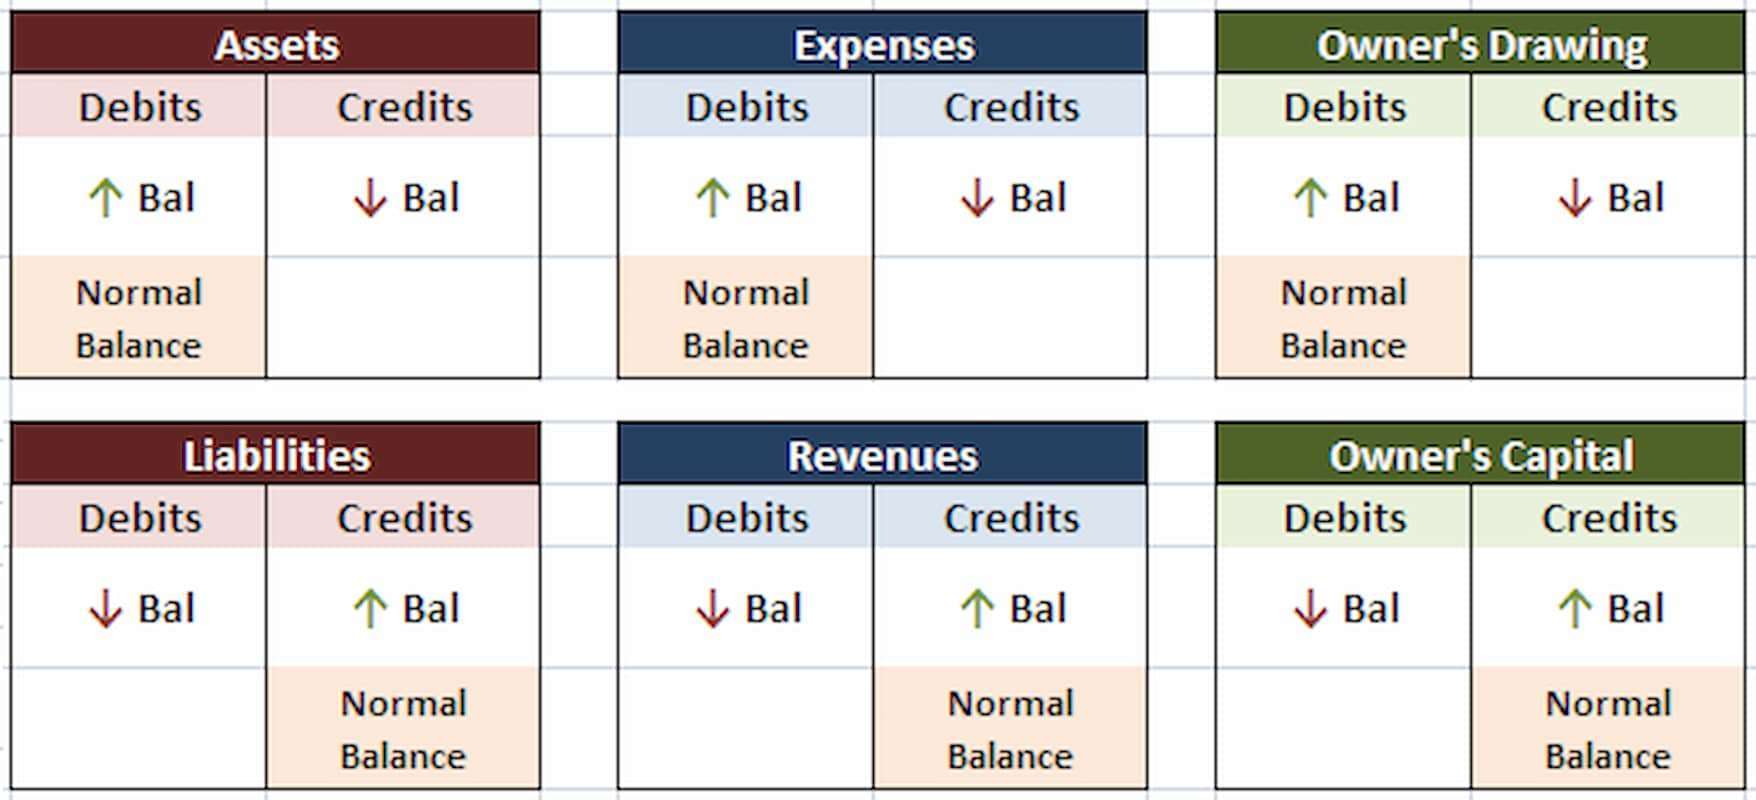 ach credits vs debits